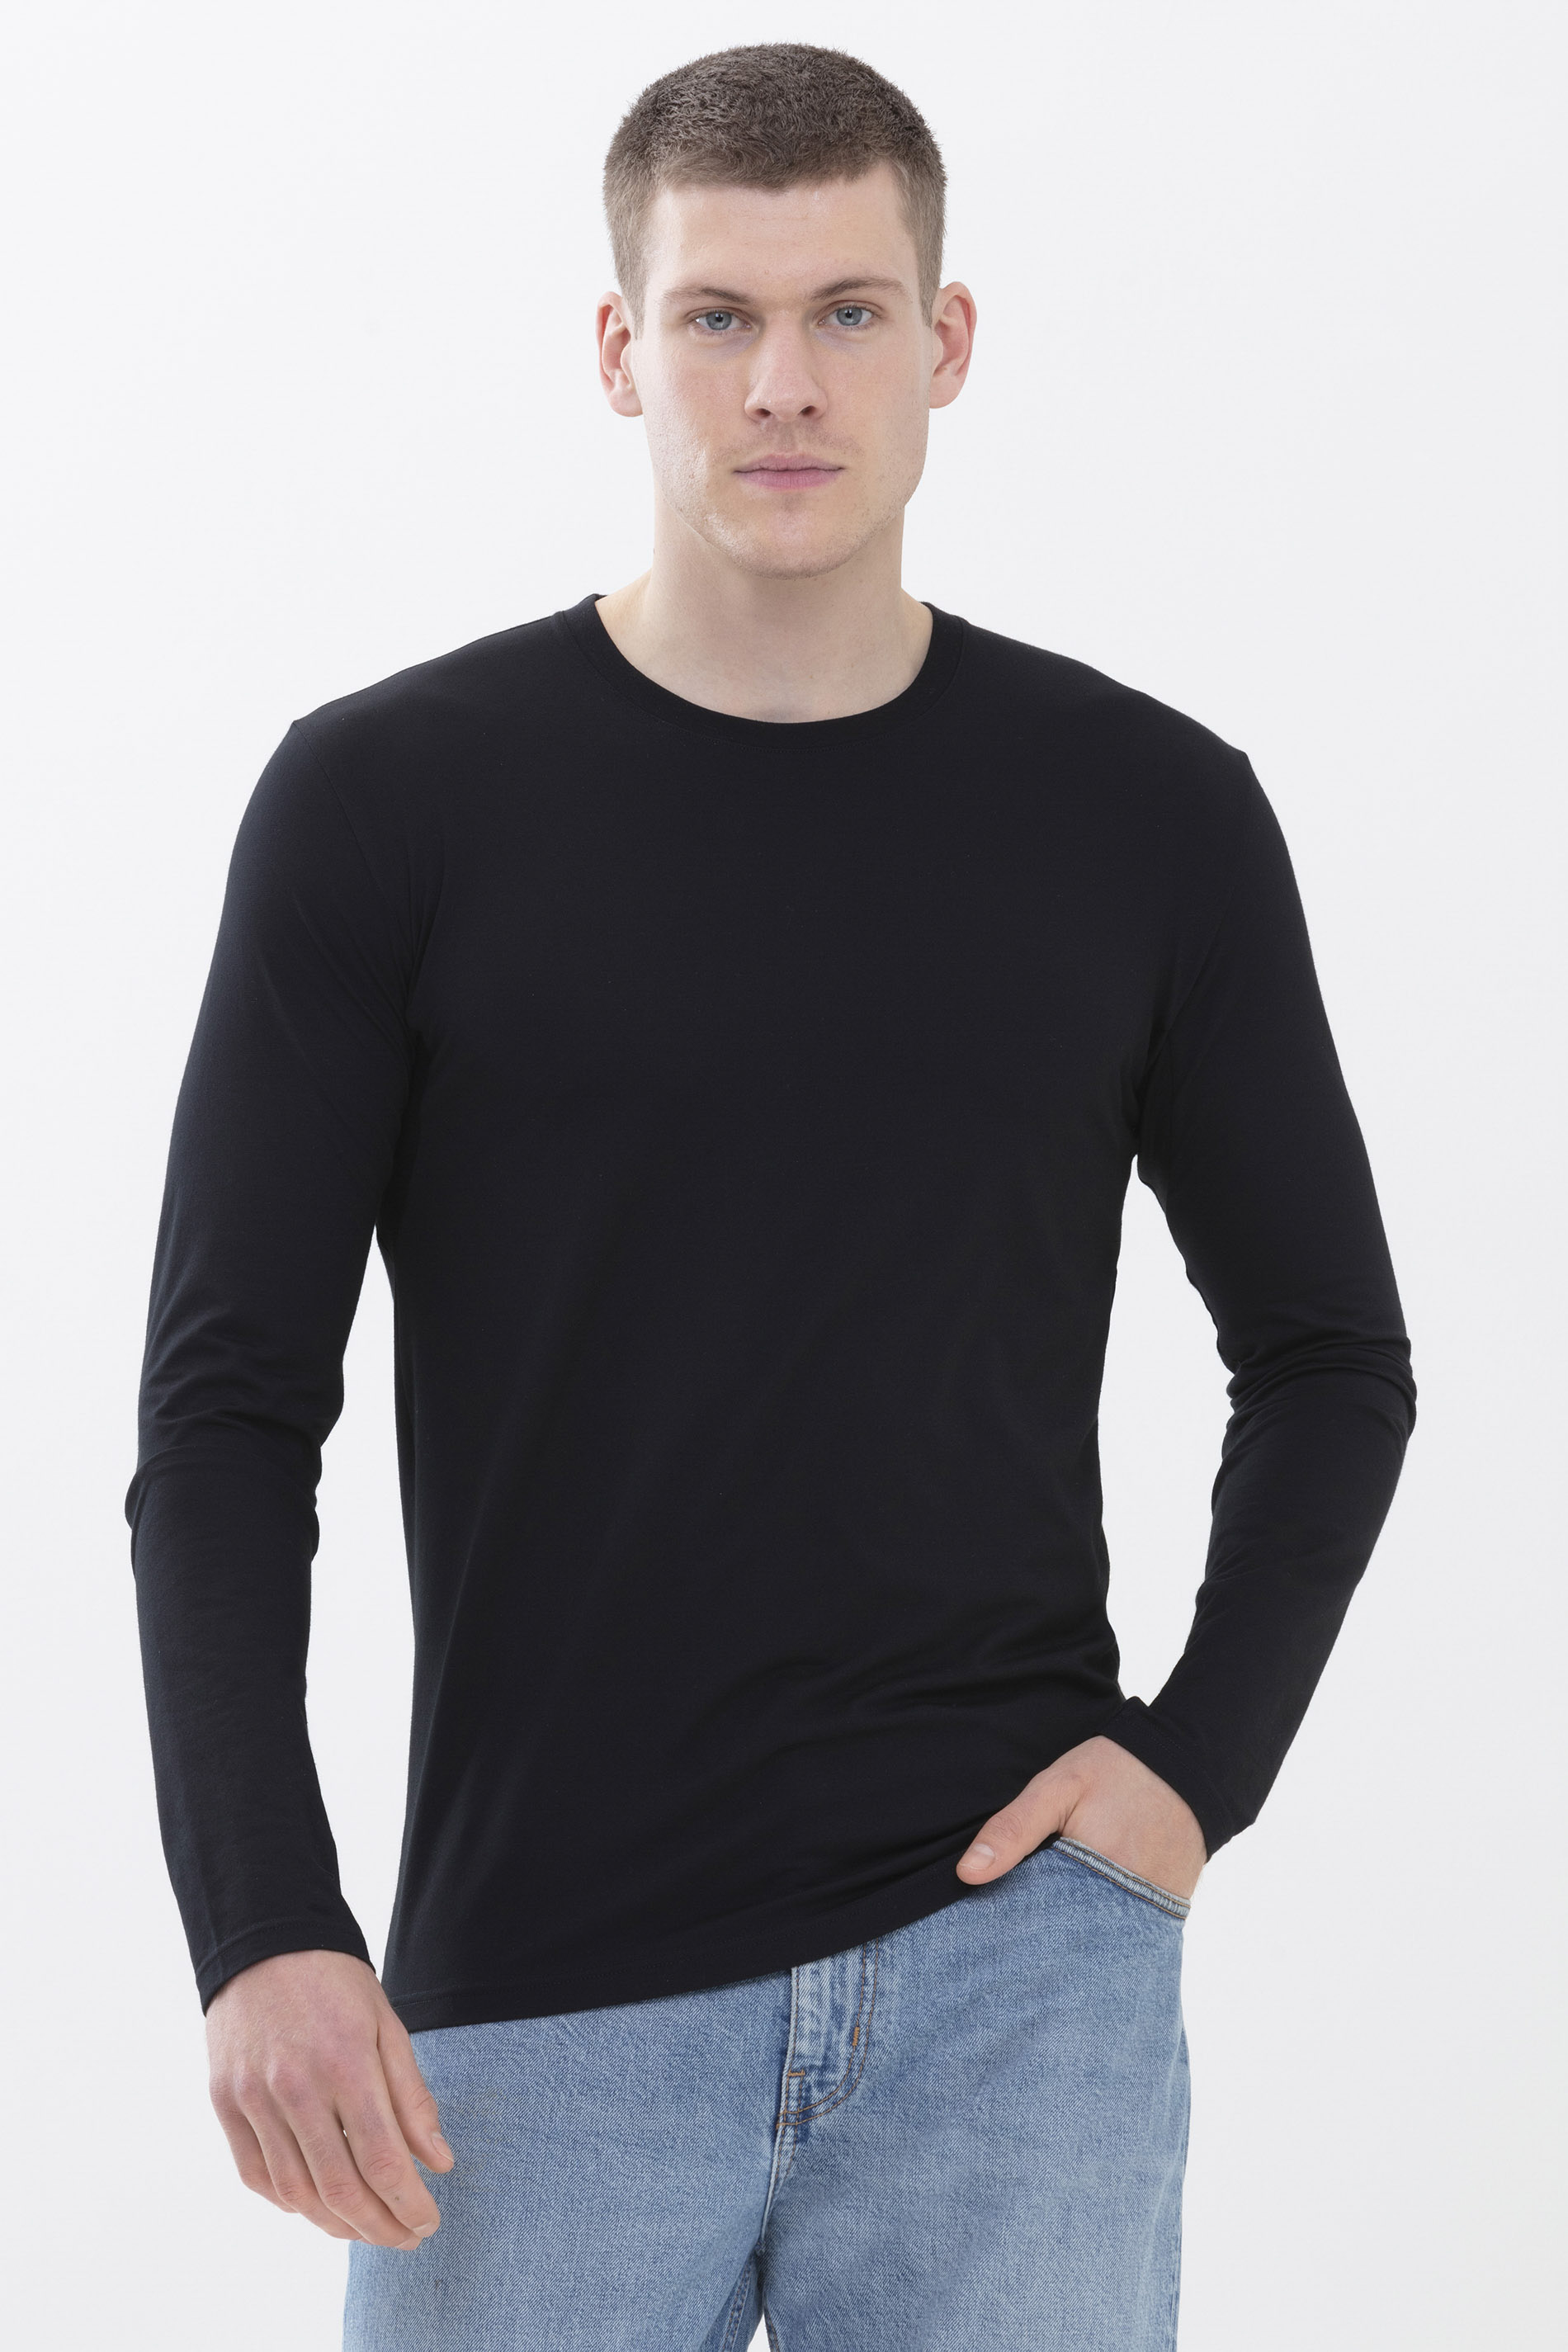 Hybrid-T-Shirt | Long-sleeve Black Serie Hybrid T-Shirt Front View | mey®